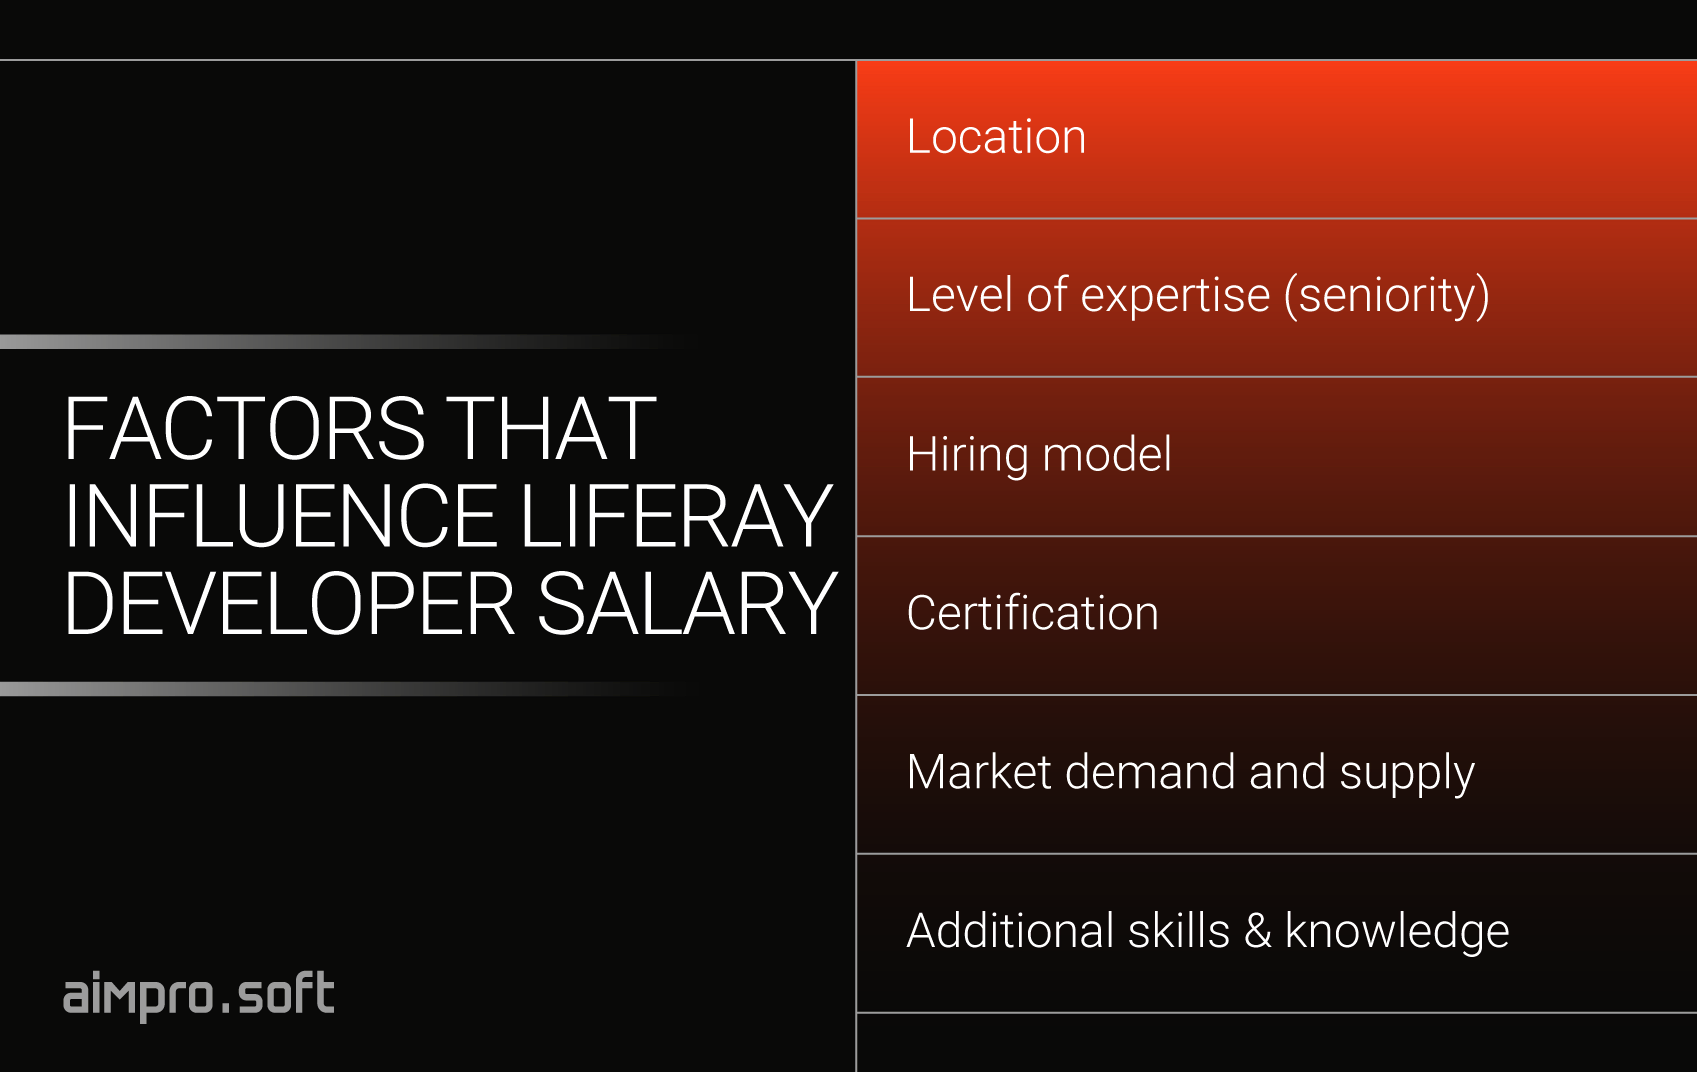 Factors that affect Liferay developer salary